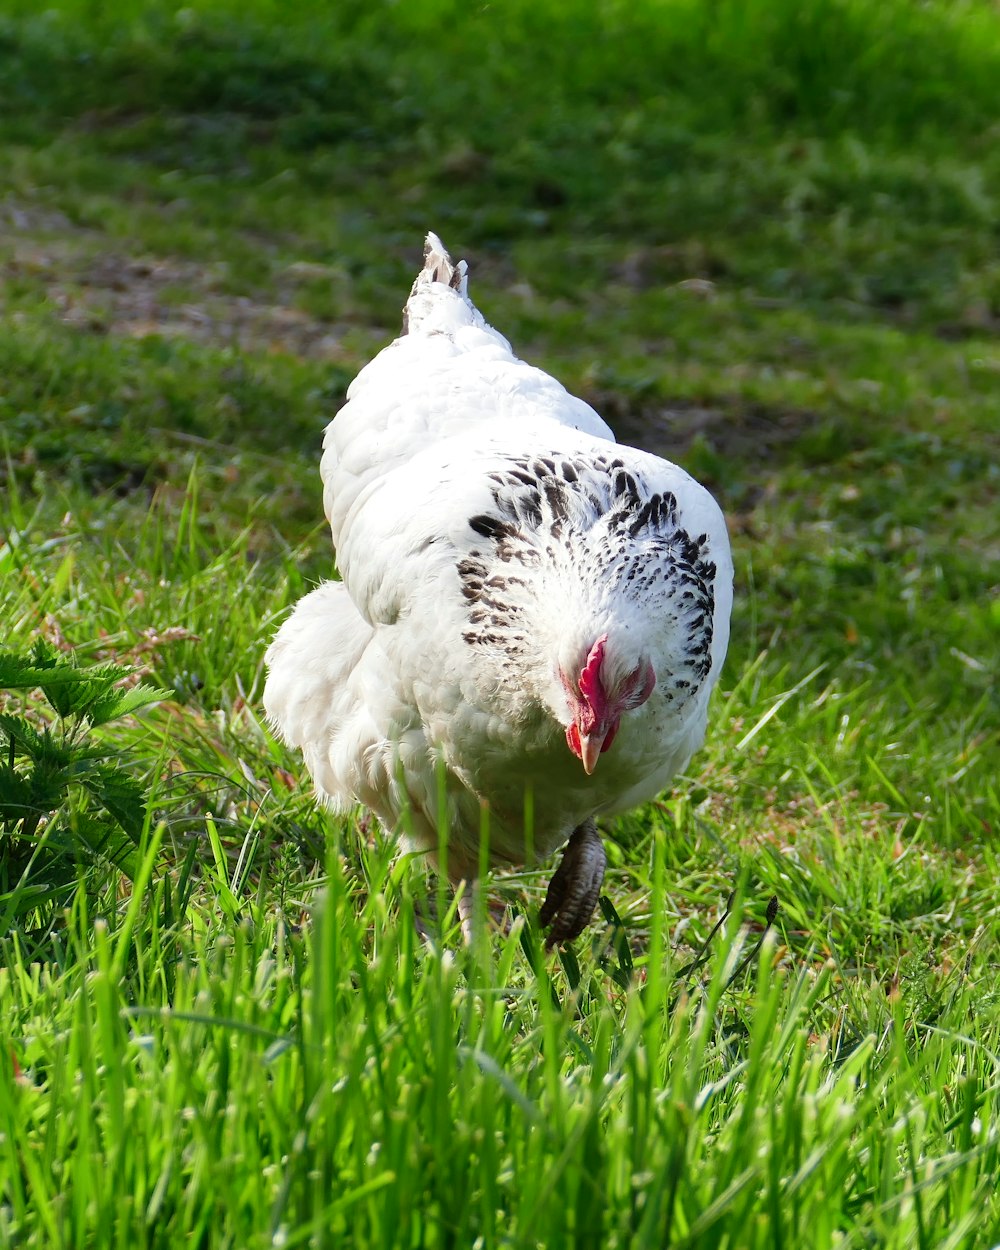 a white chicken is walking through the grass